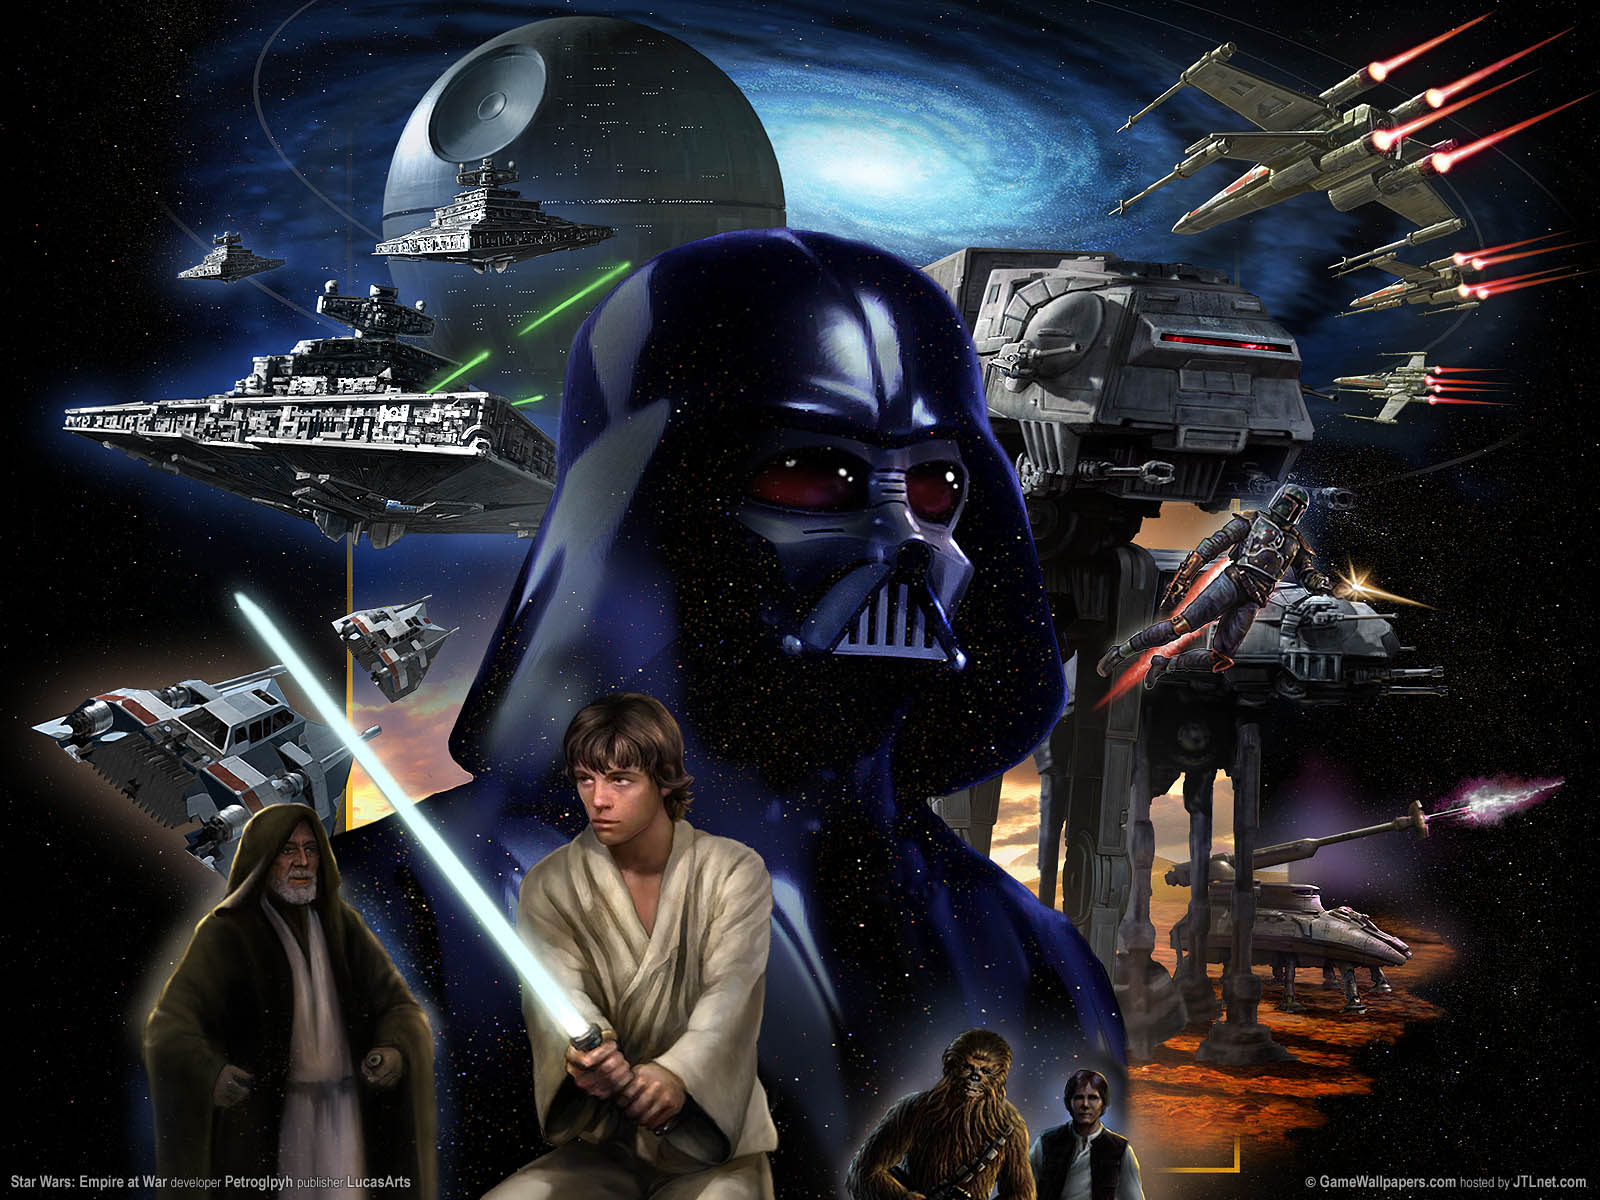 Fond Ecran Wallpaper Star Wars Empire At War Jeuxvideo Fr